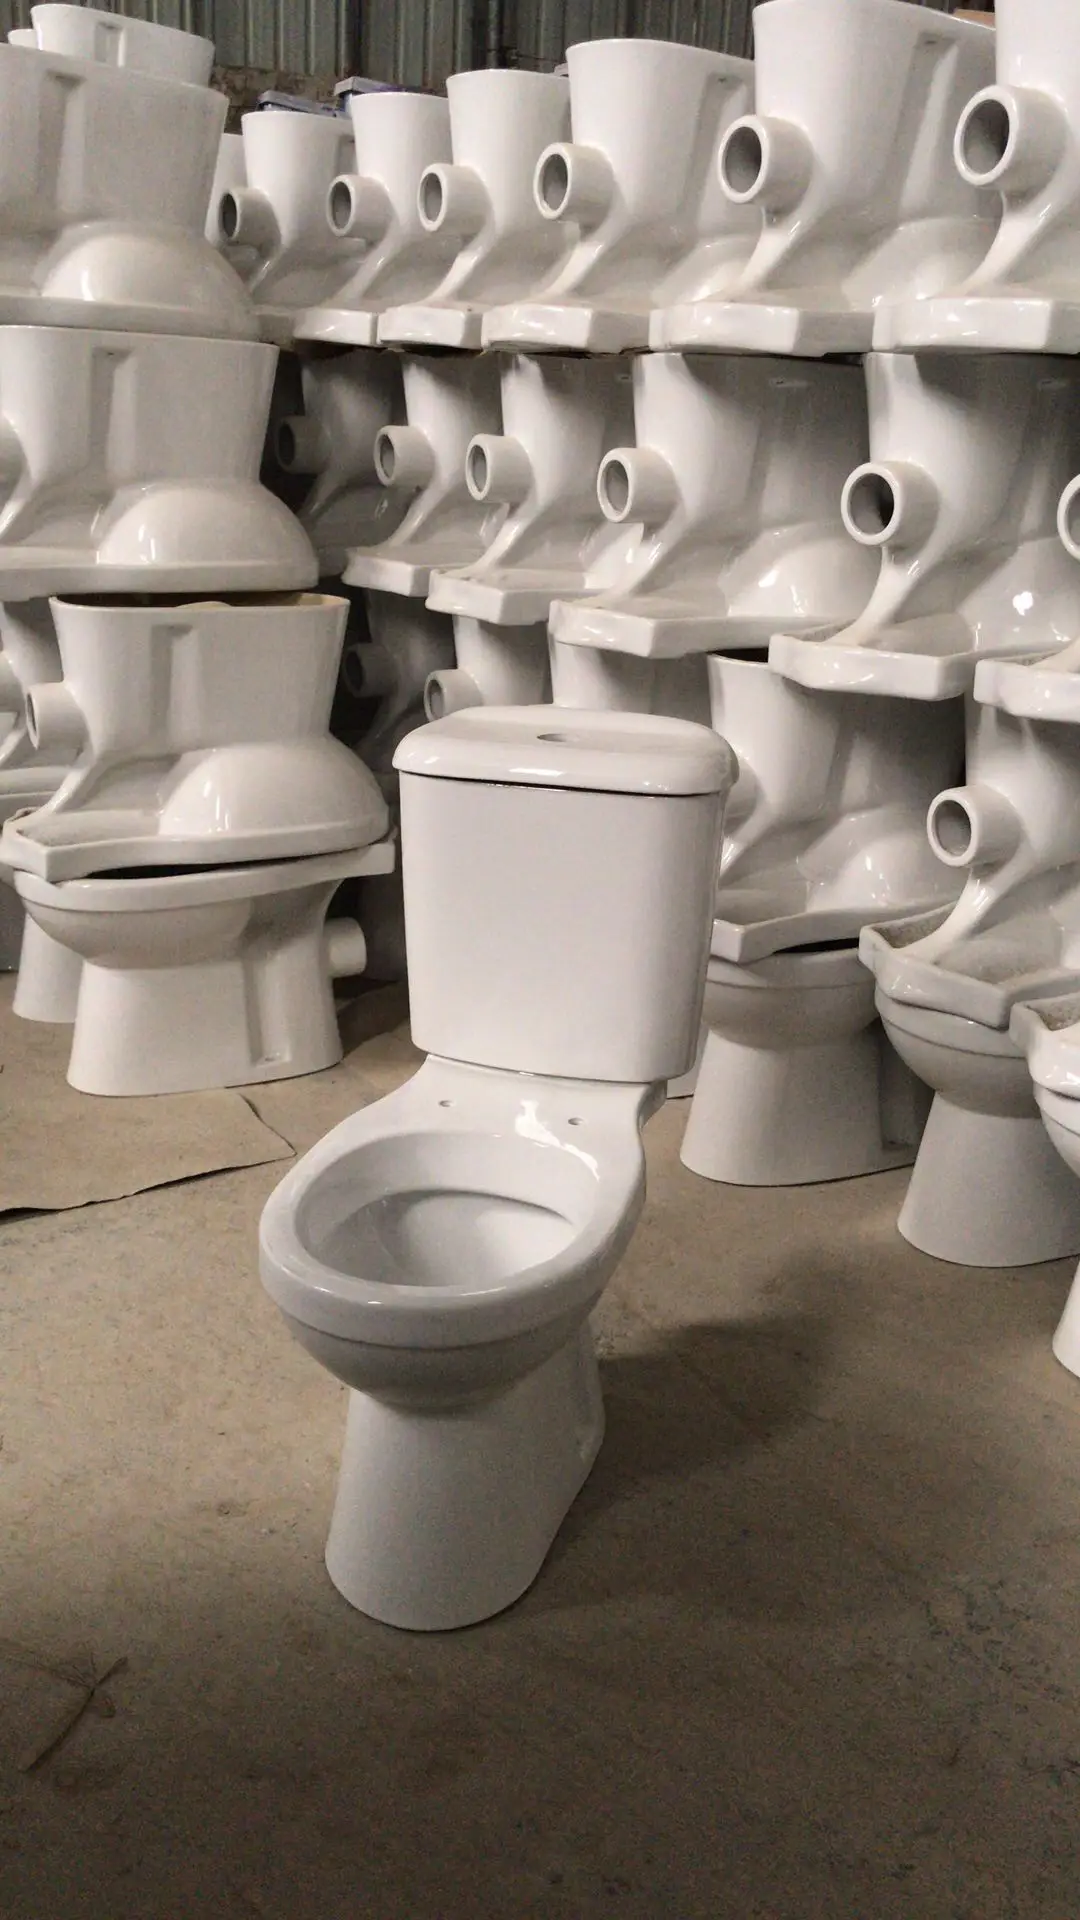 African,EU market design ceramic two piece couple toilet wc seat JY2118